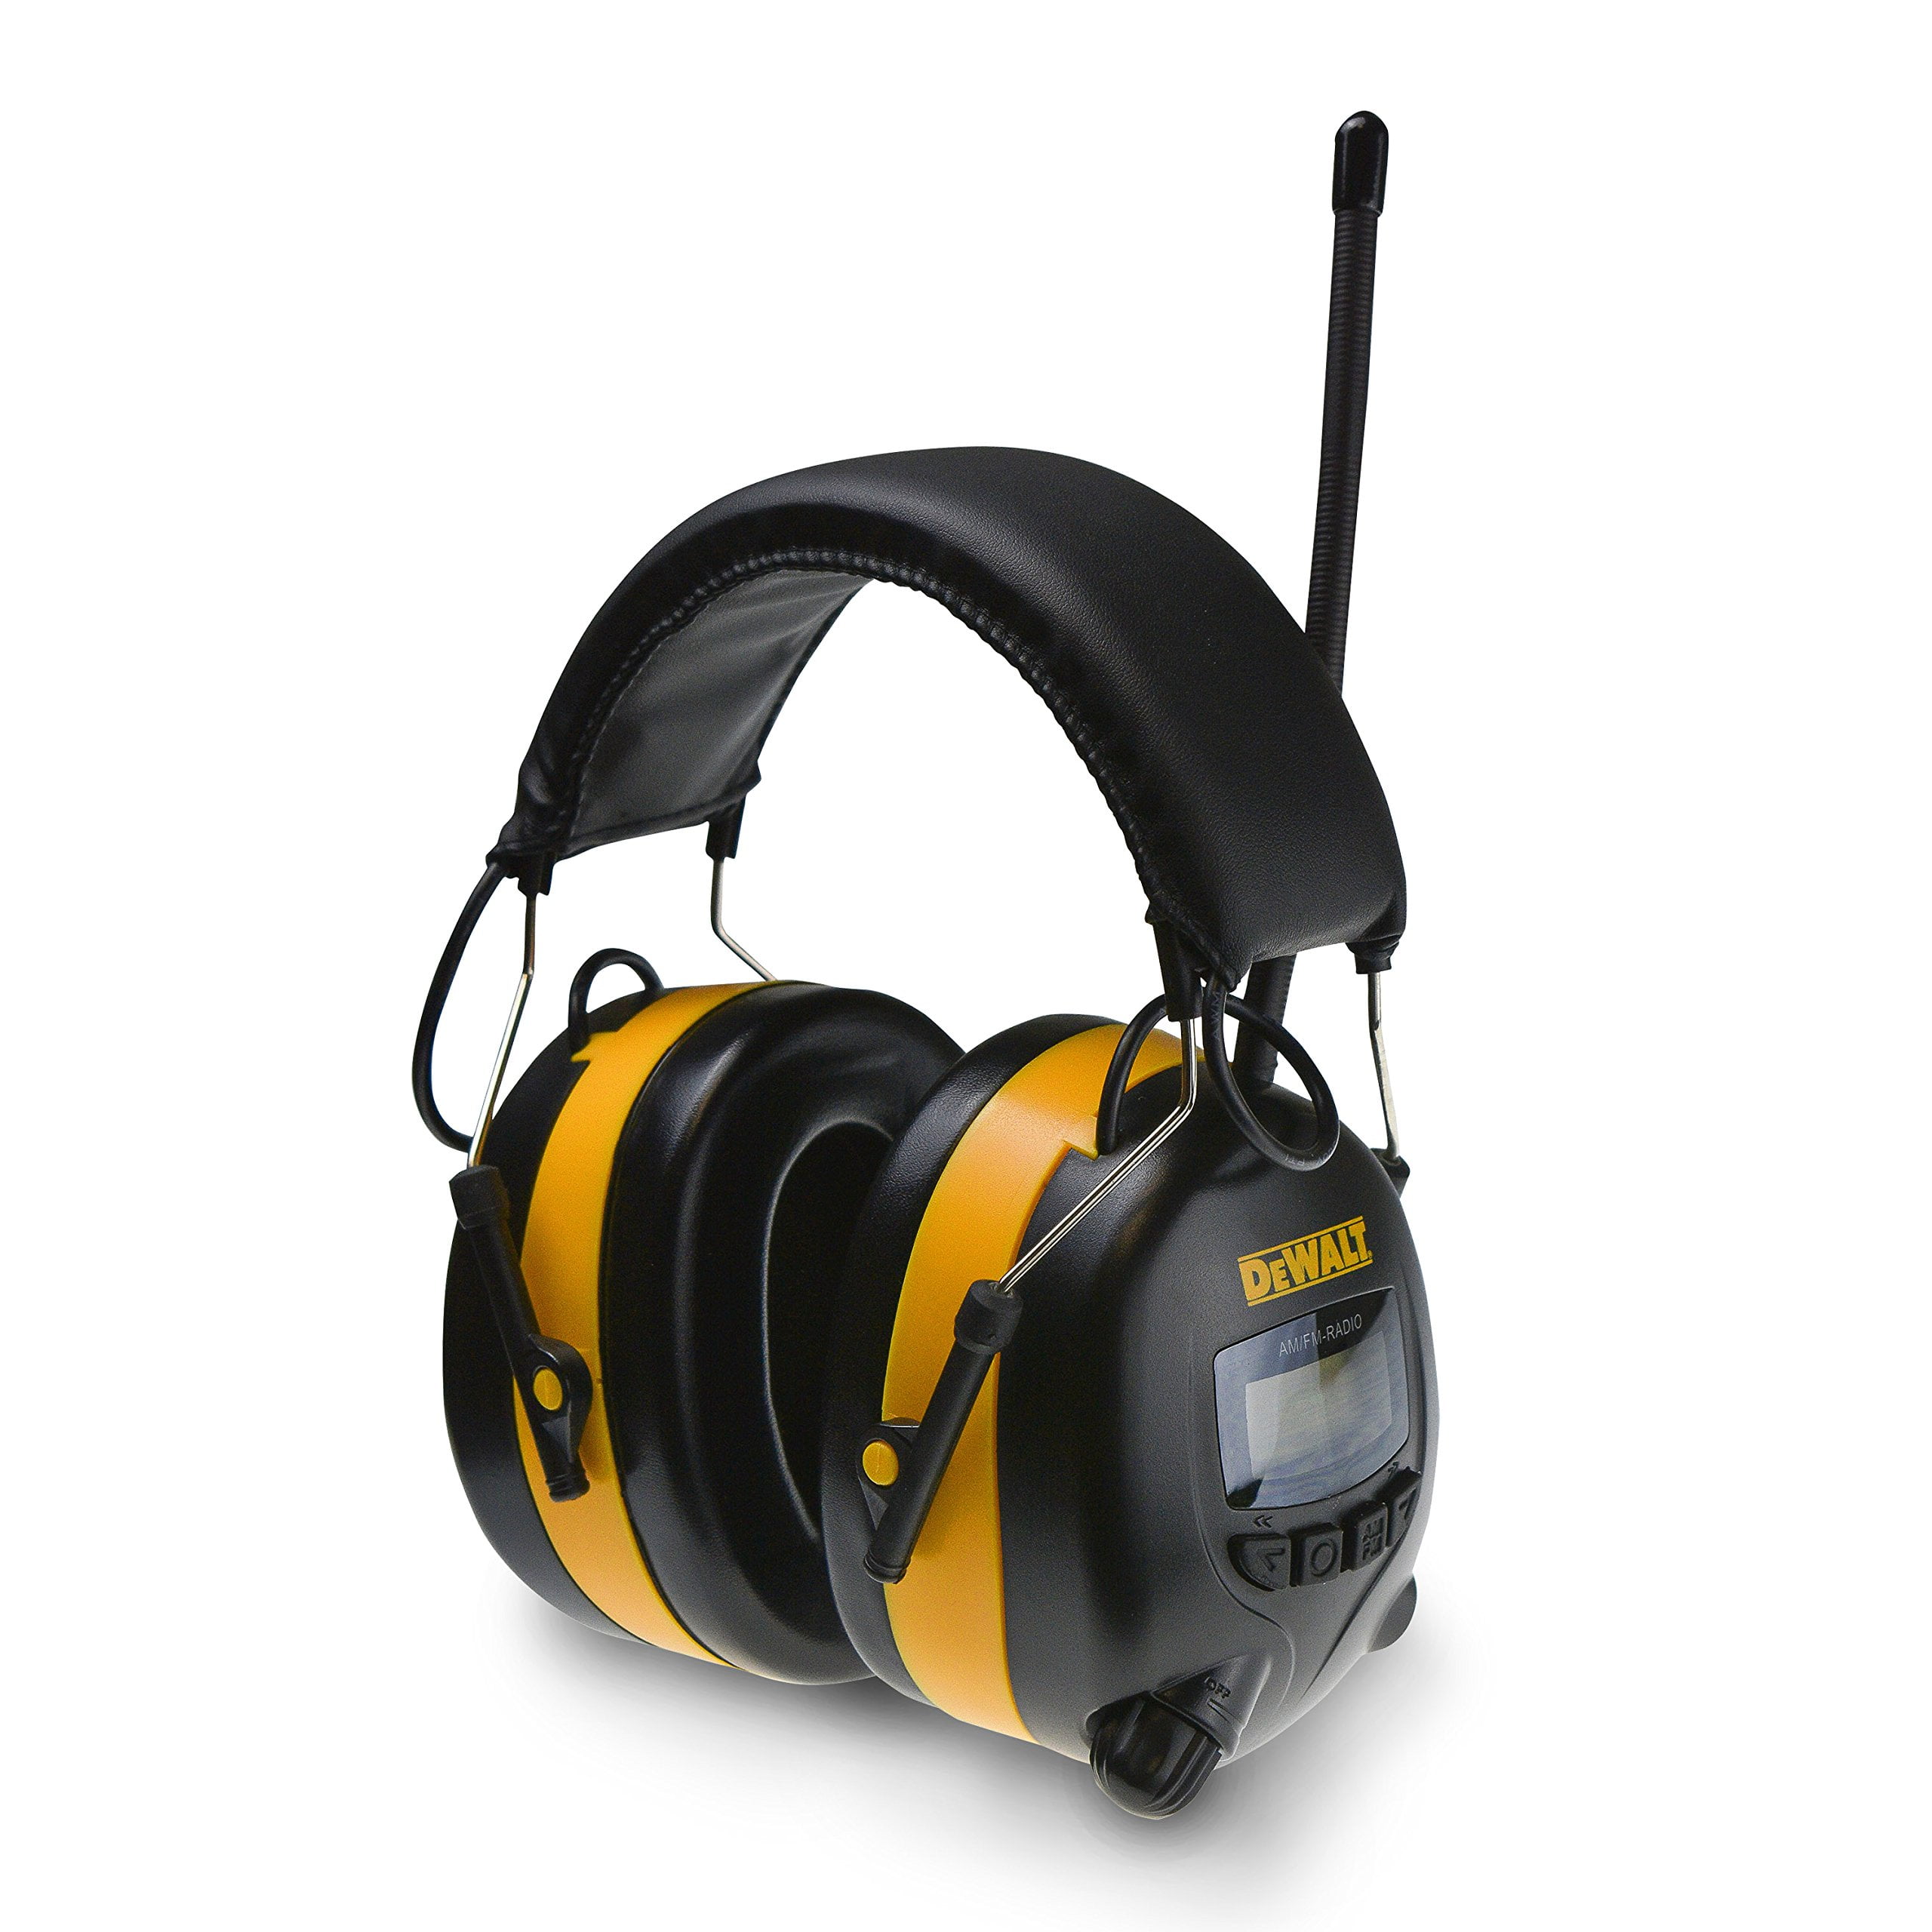 Pack WORKTUNES Digital AM FM MP3 HEADPHONES Hearing PROTECTION w/ Batteries 2 